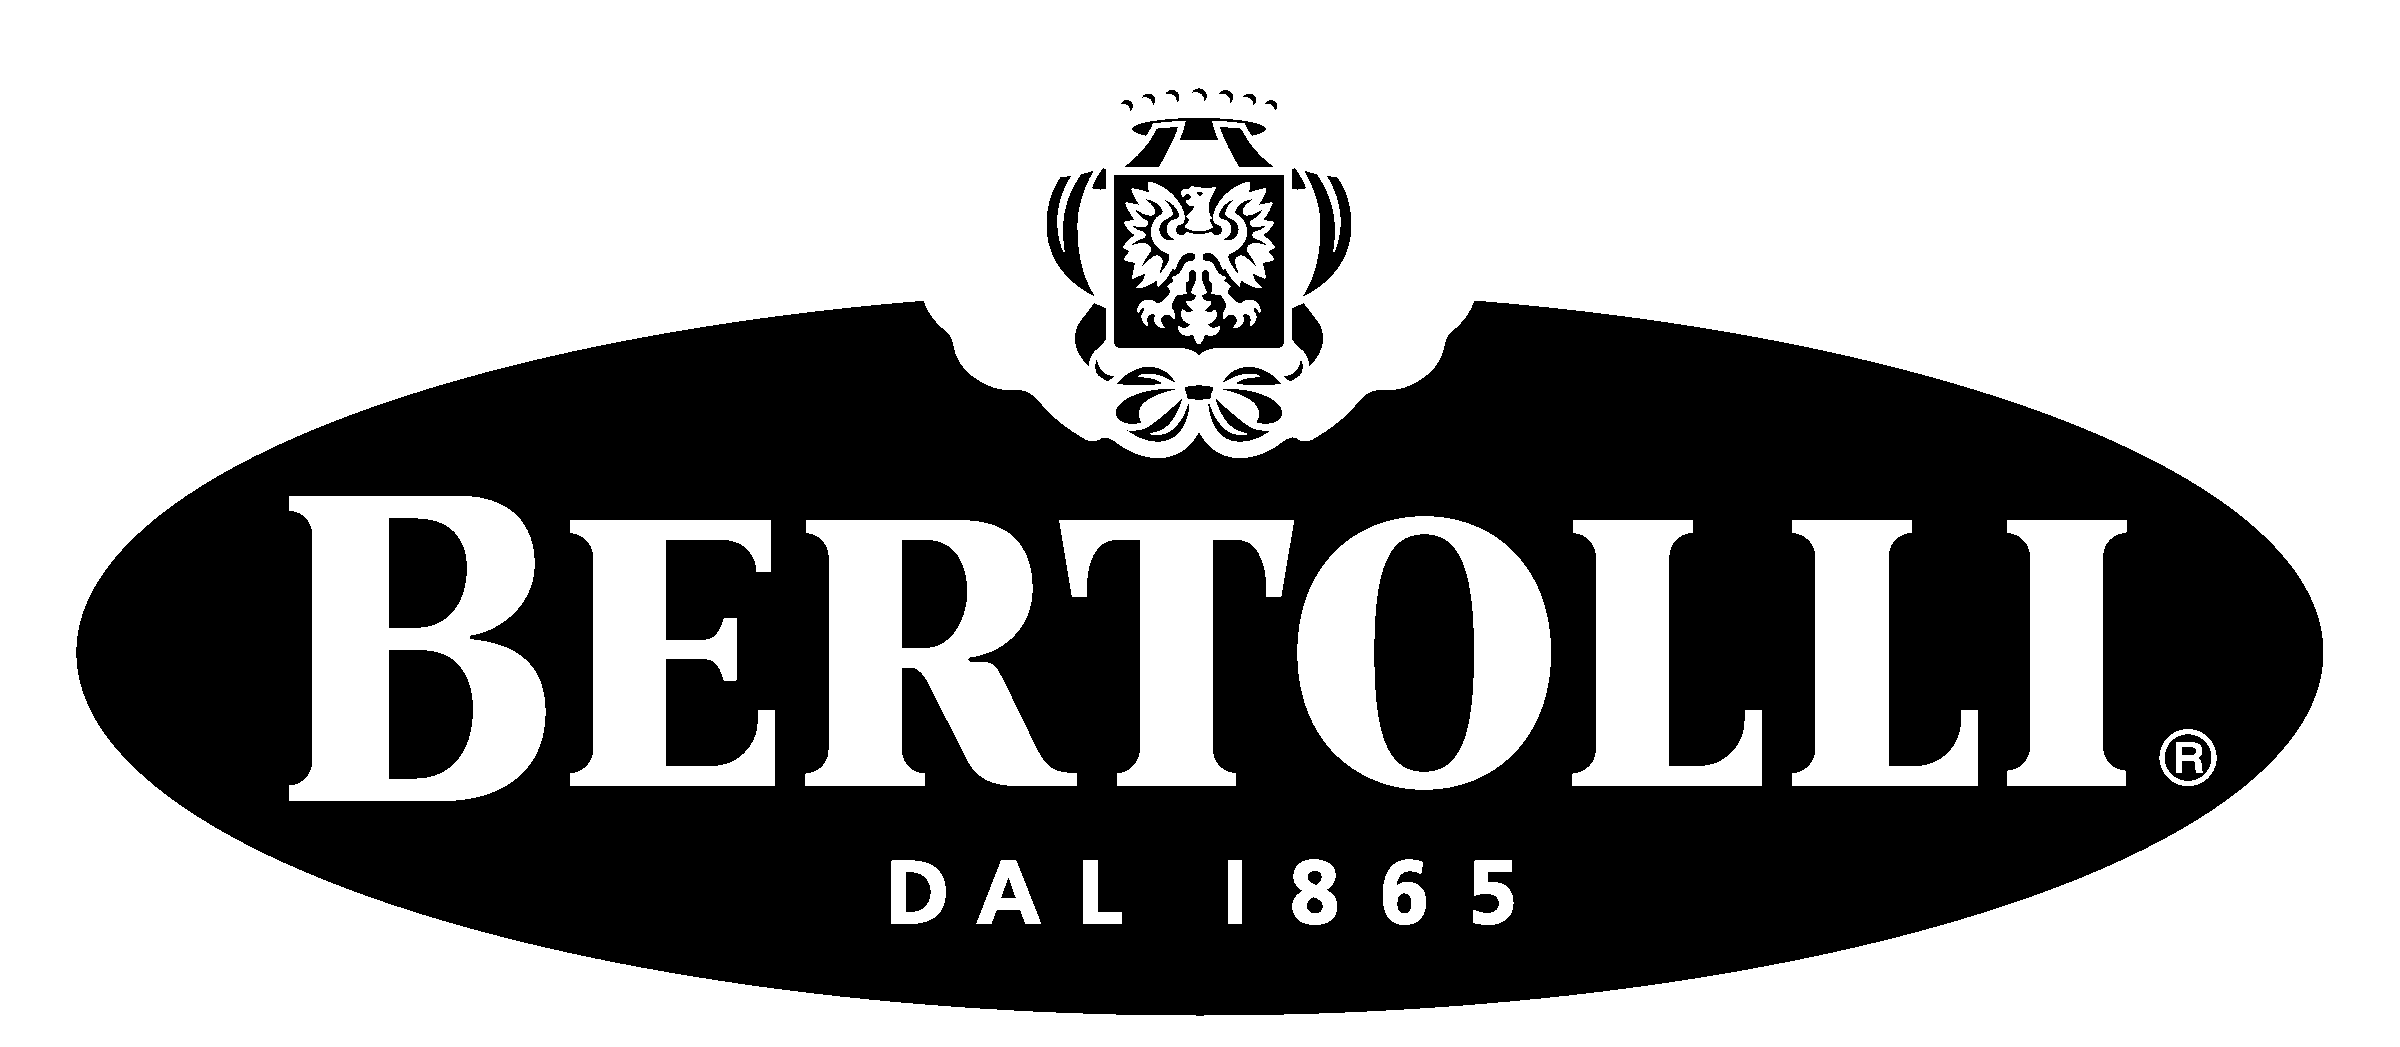 Bertolli Logo - Bertolli Logo PNG Transparent & SVG Vector - Freebie Supply